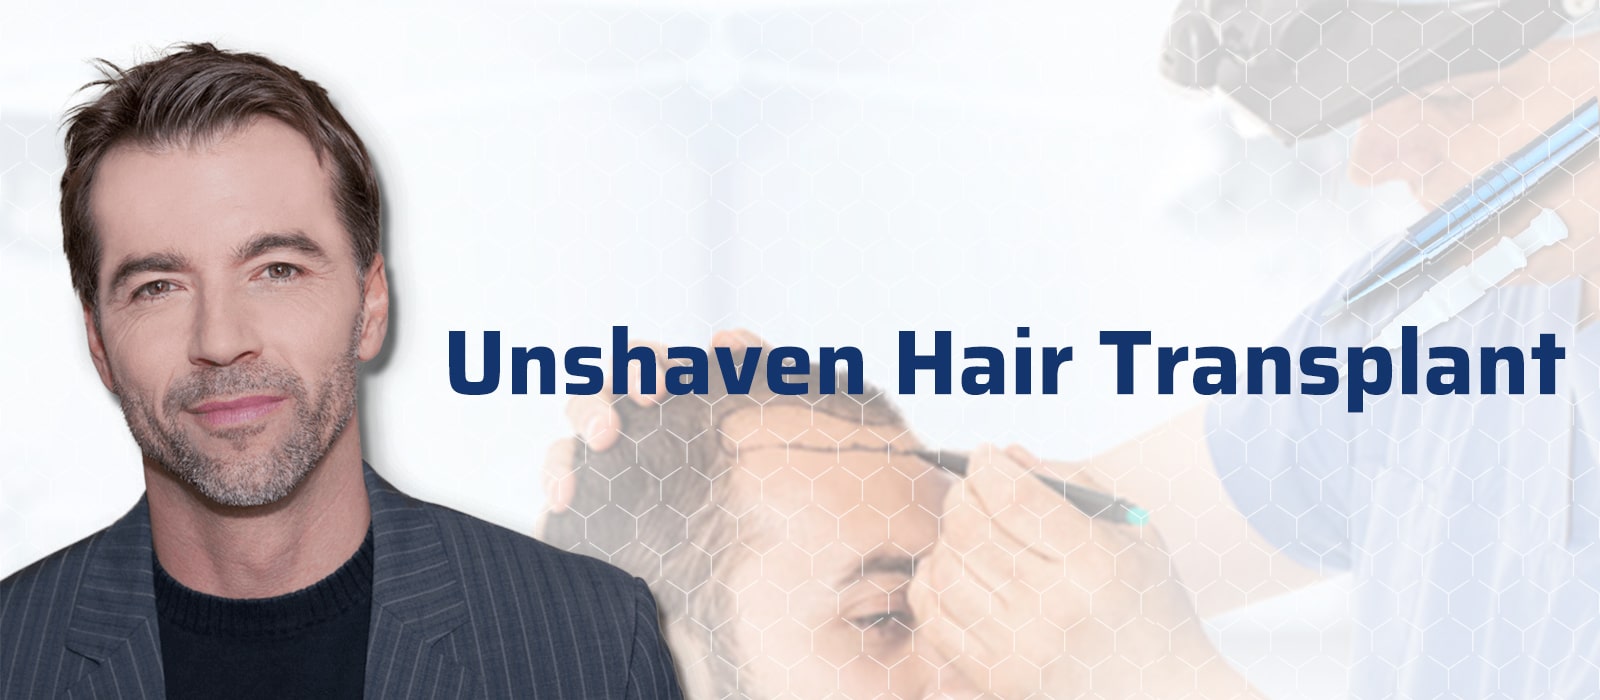 Unshaven hair transplant